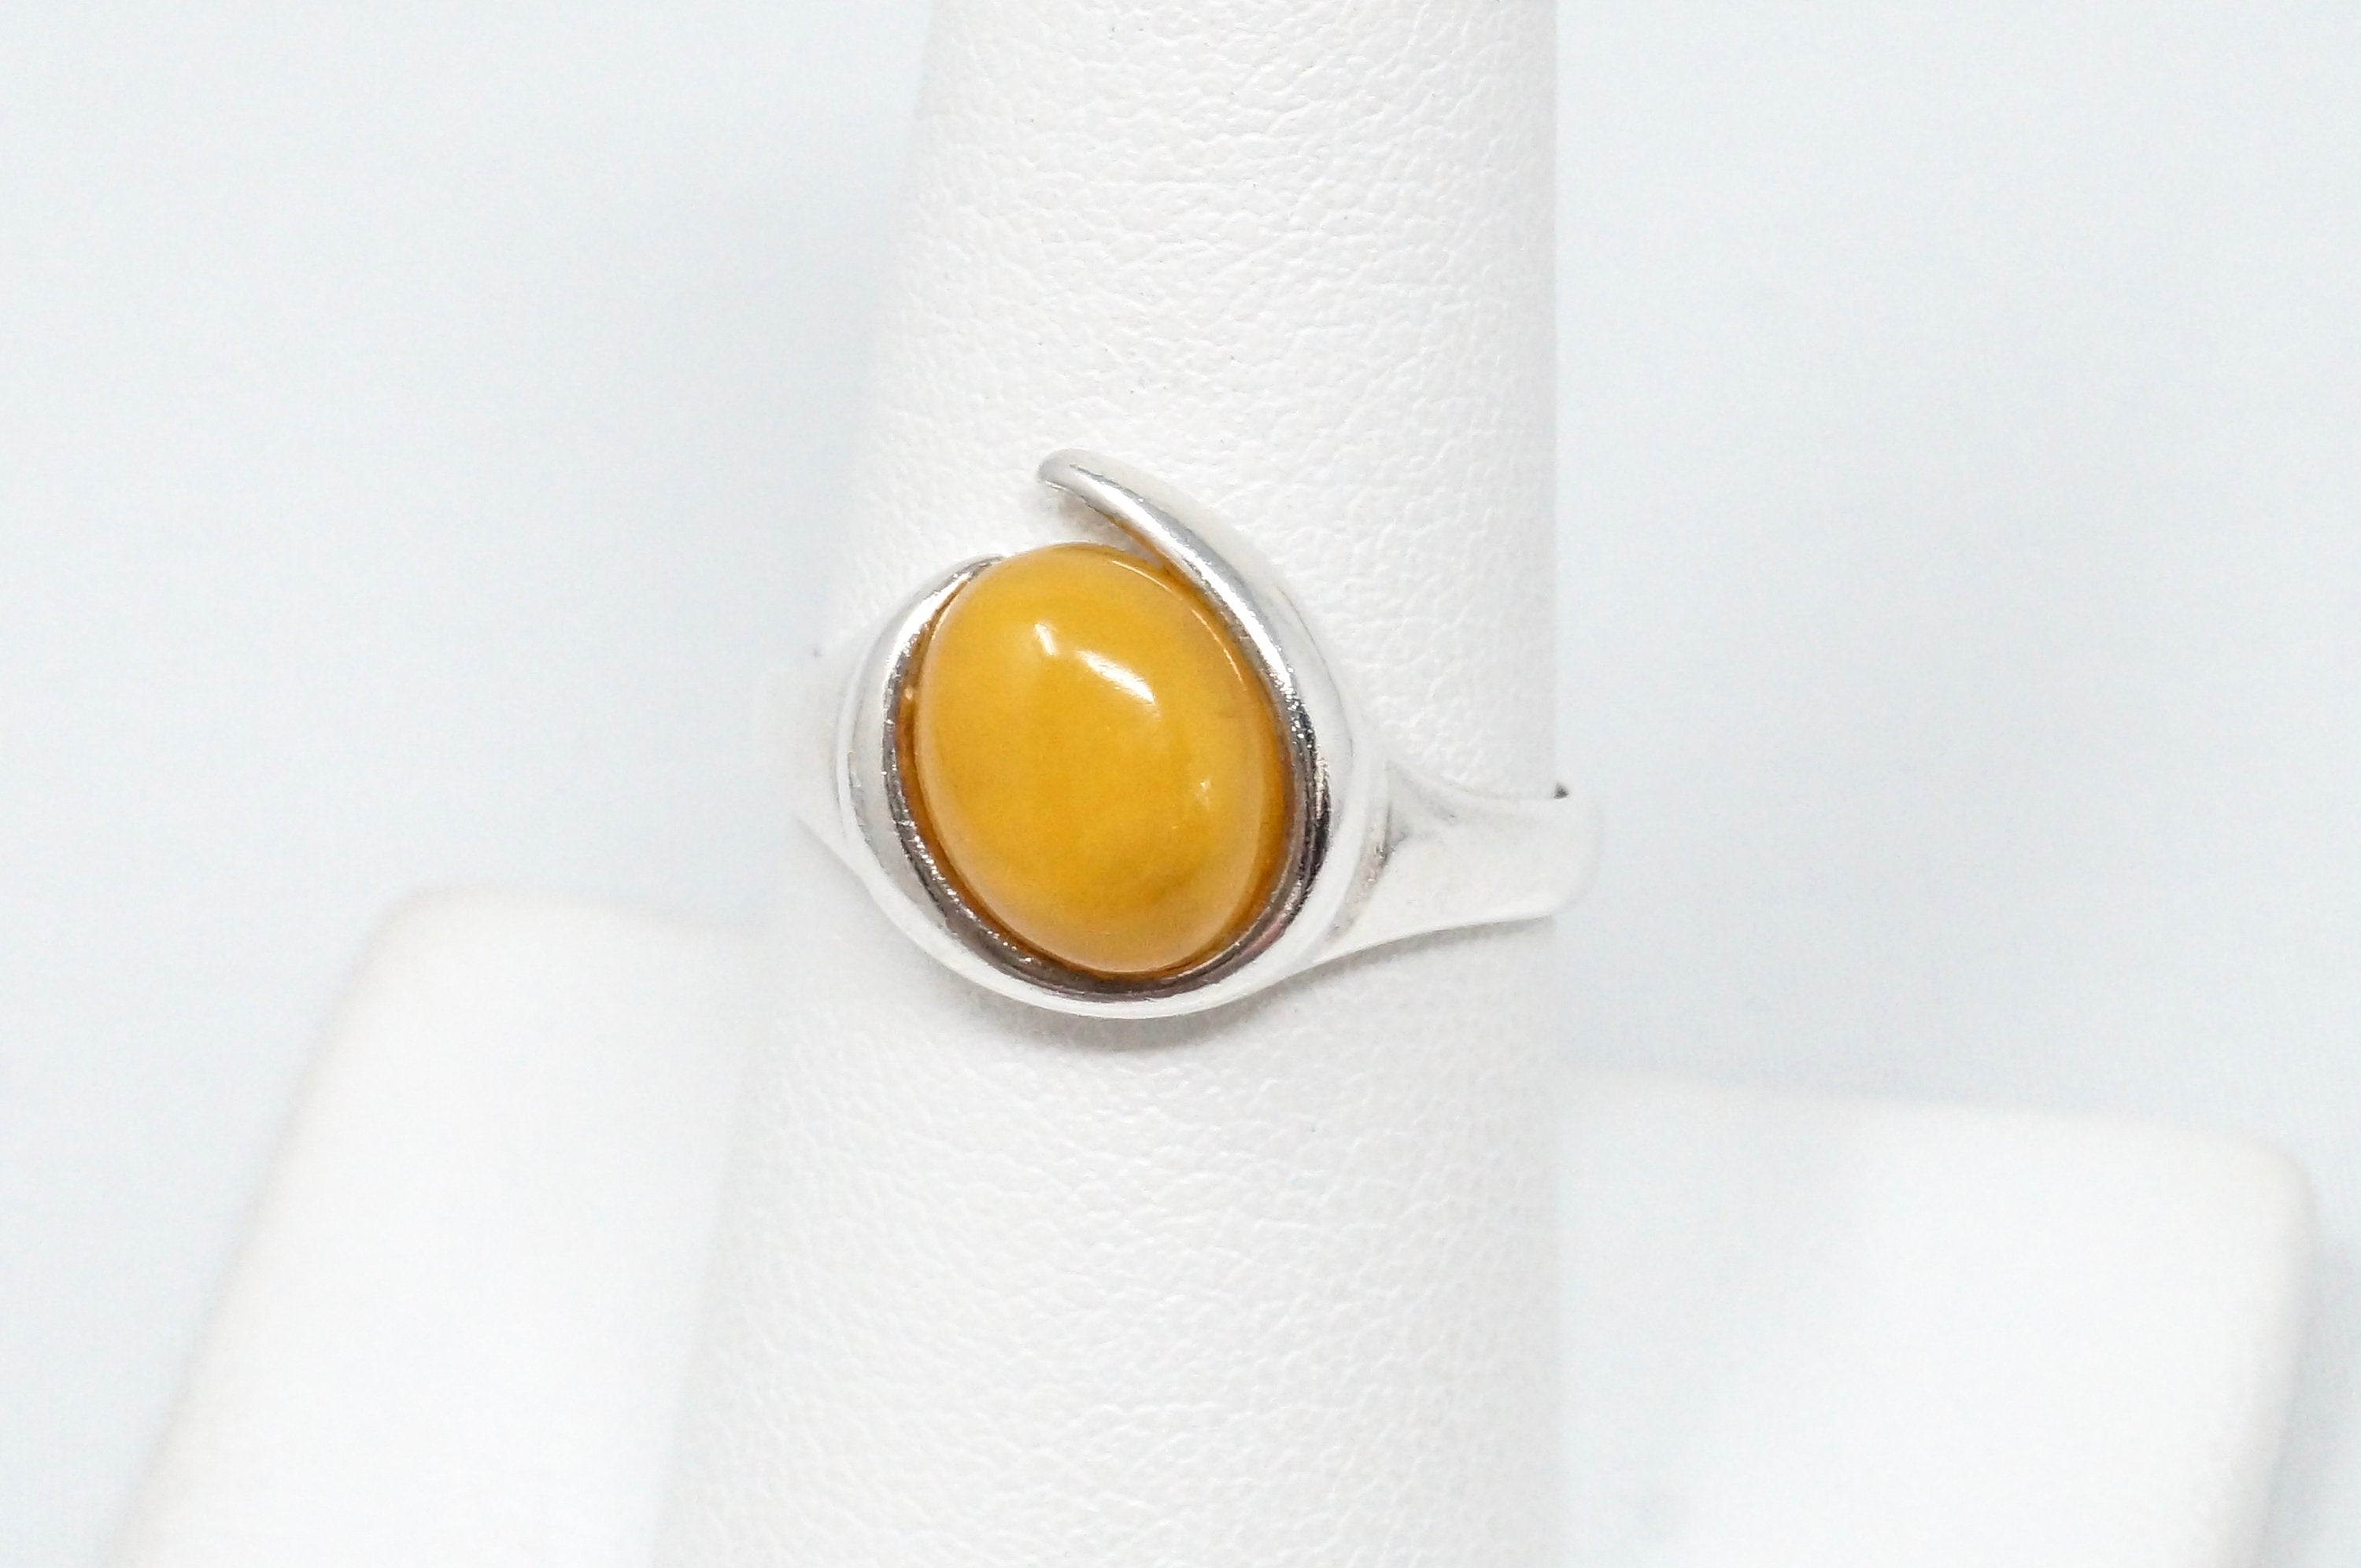 Vintage Modernist Minimalist Style Orange Amber Sterling Silver Ring - Size 7.5